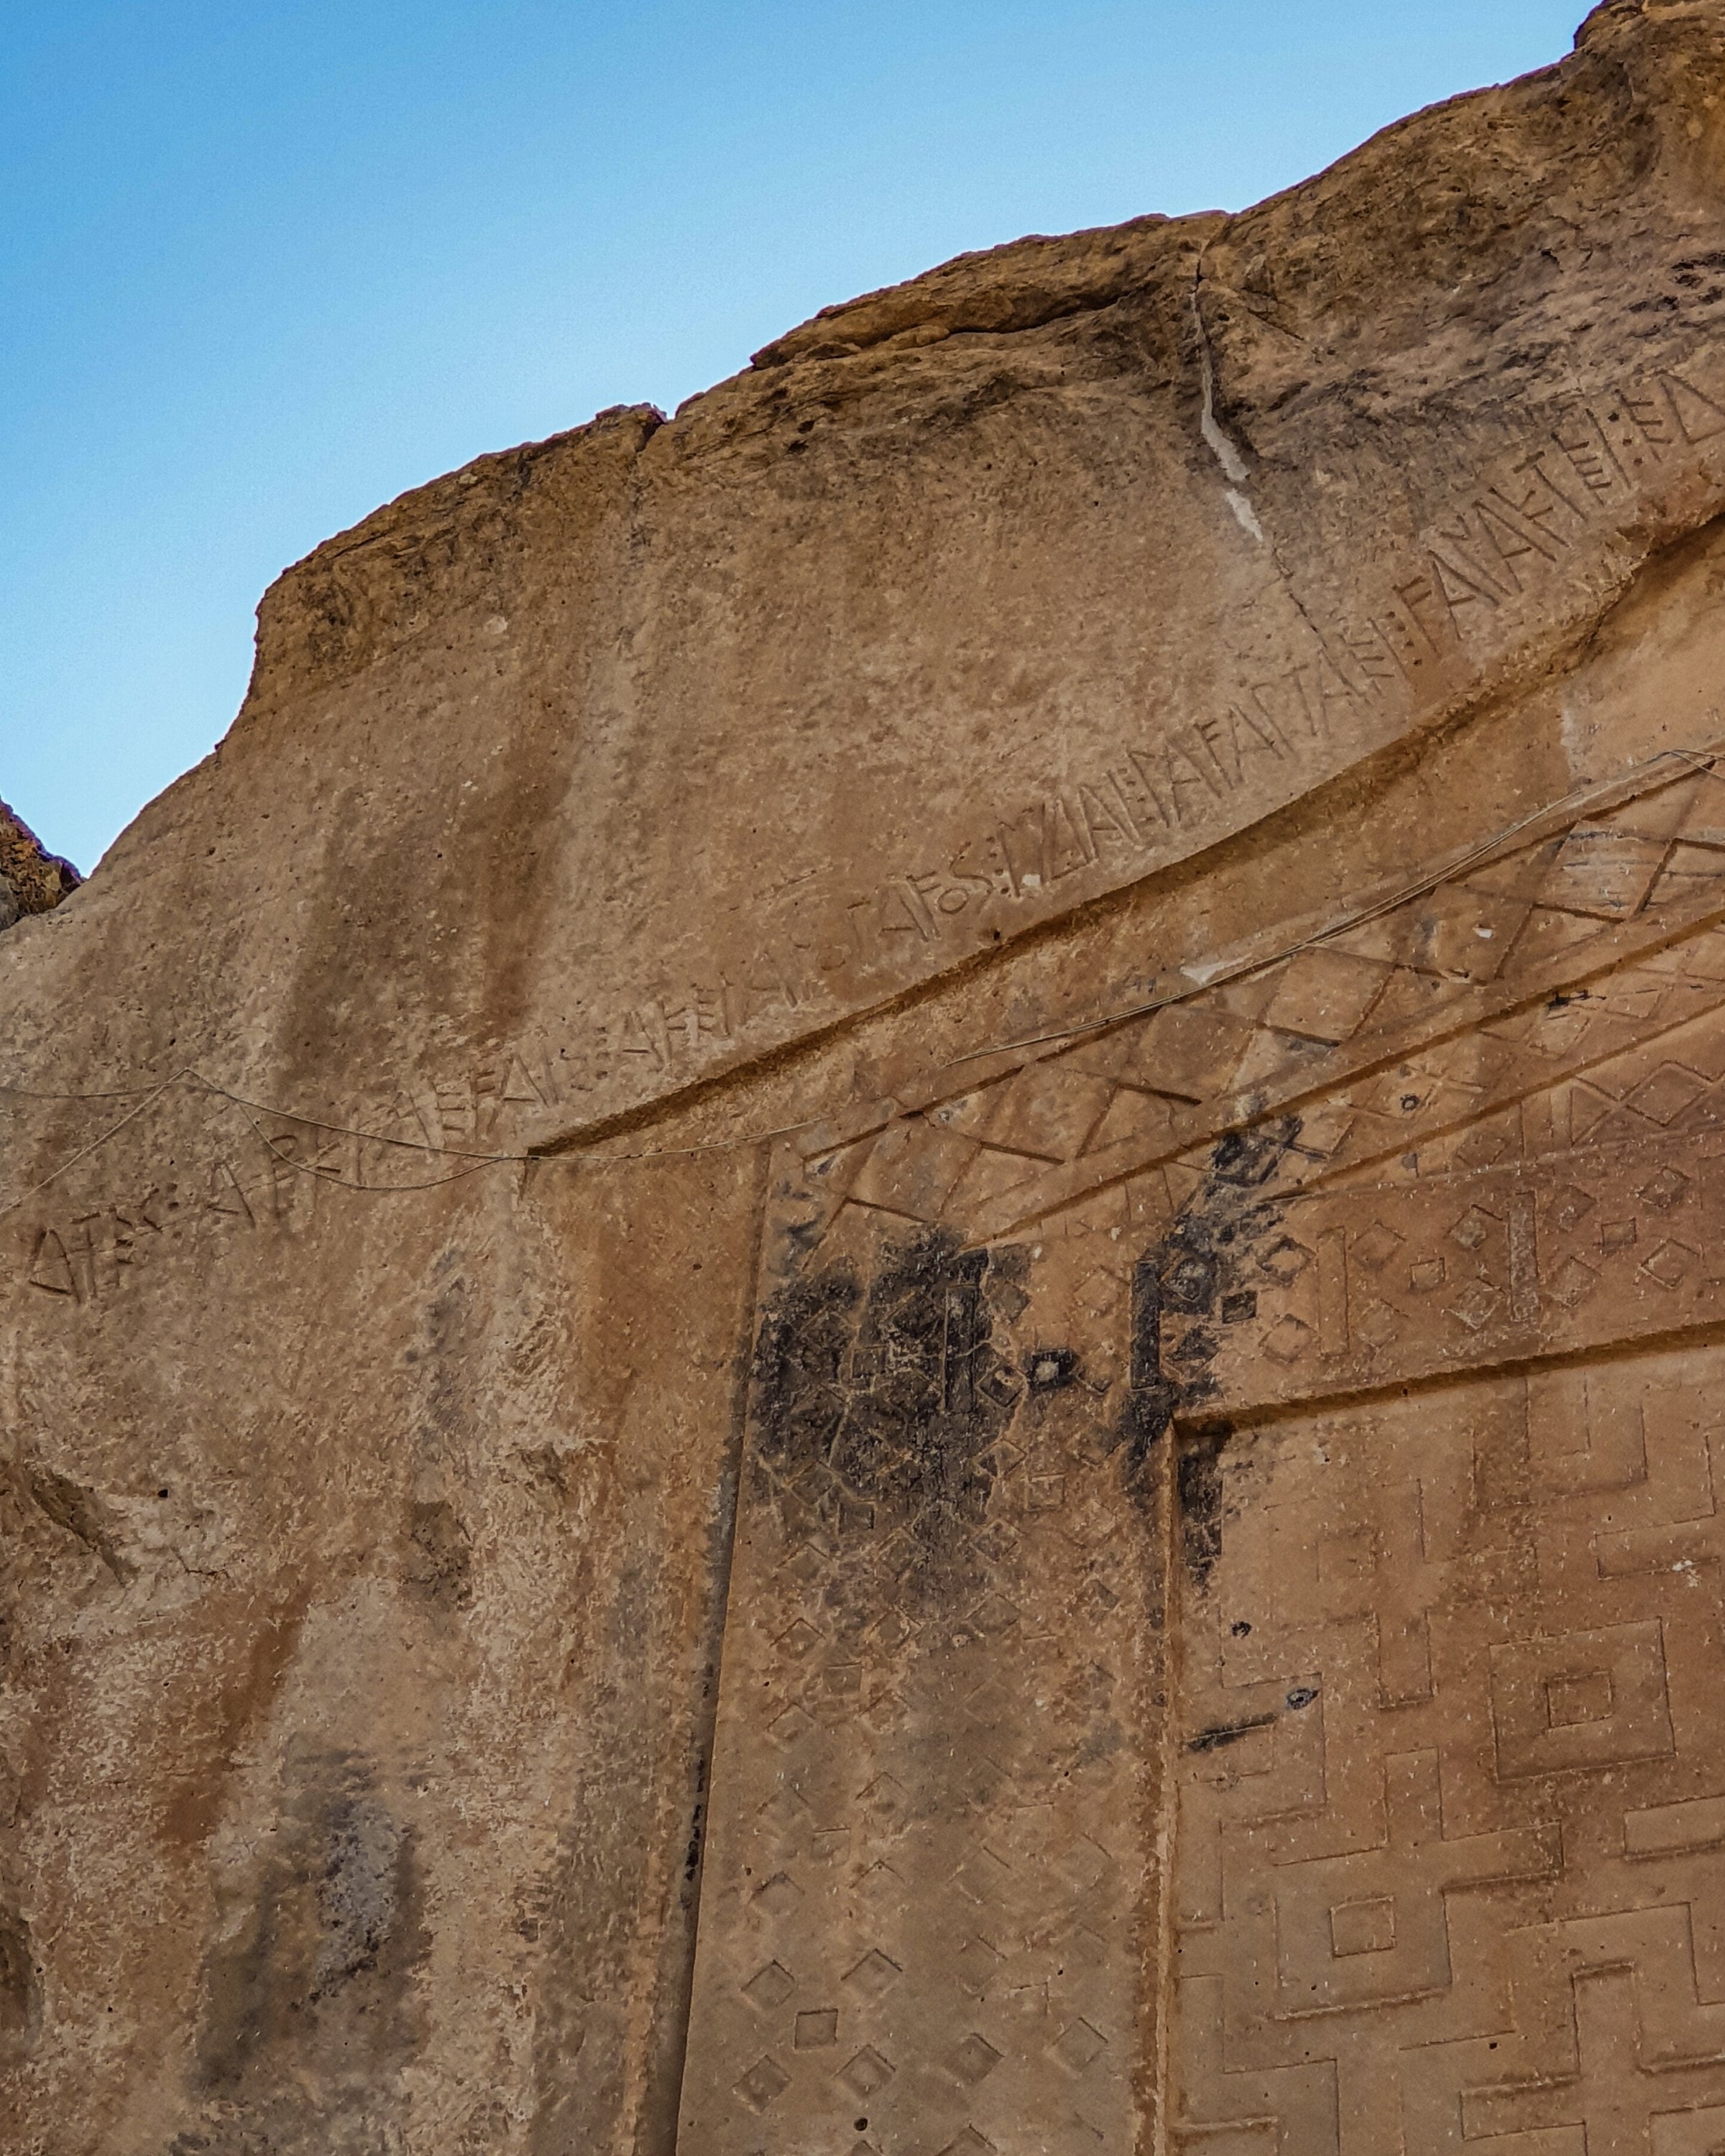 Old inscriptions in Phrygian can be seen on the Midas Monument in Yazılıkaya. (Photo by Argun Konuk)